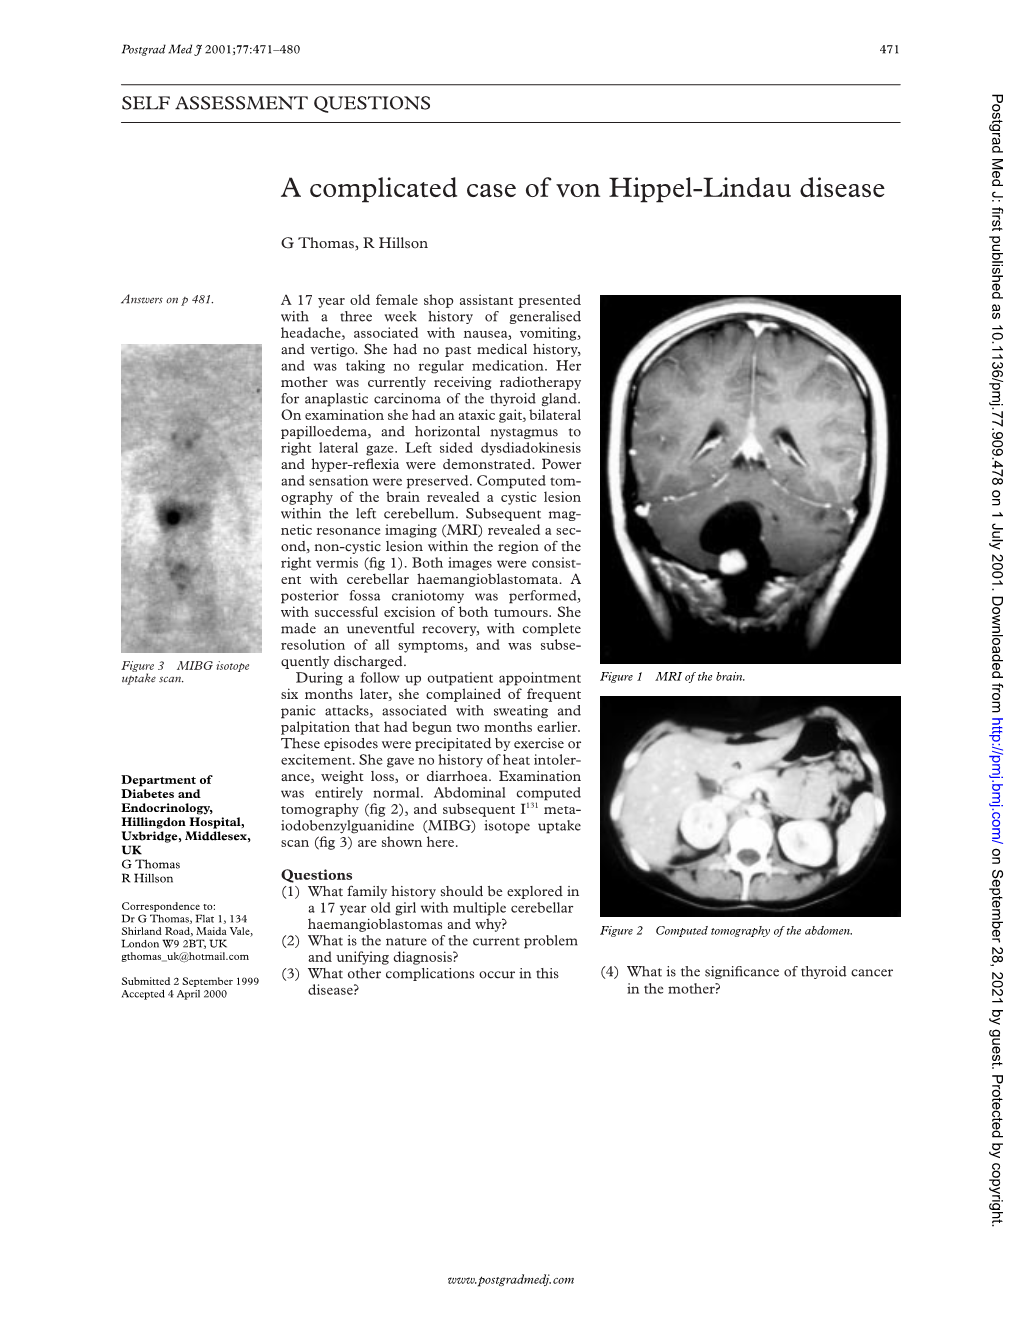 A Complicated Case of Von Hippel-Lindau Disease